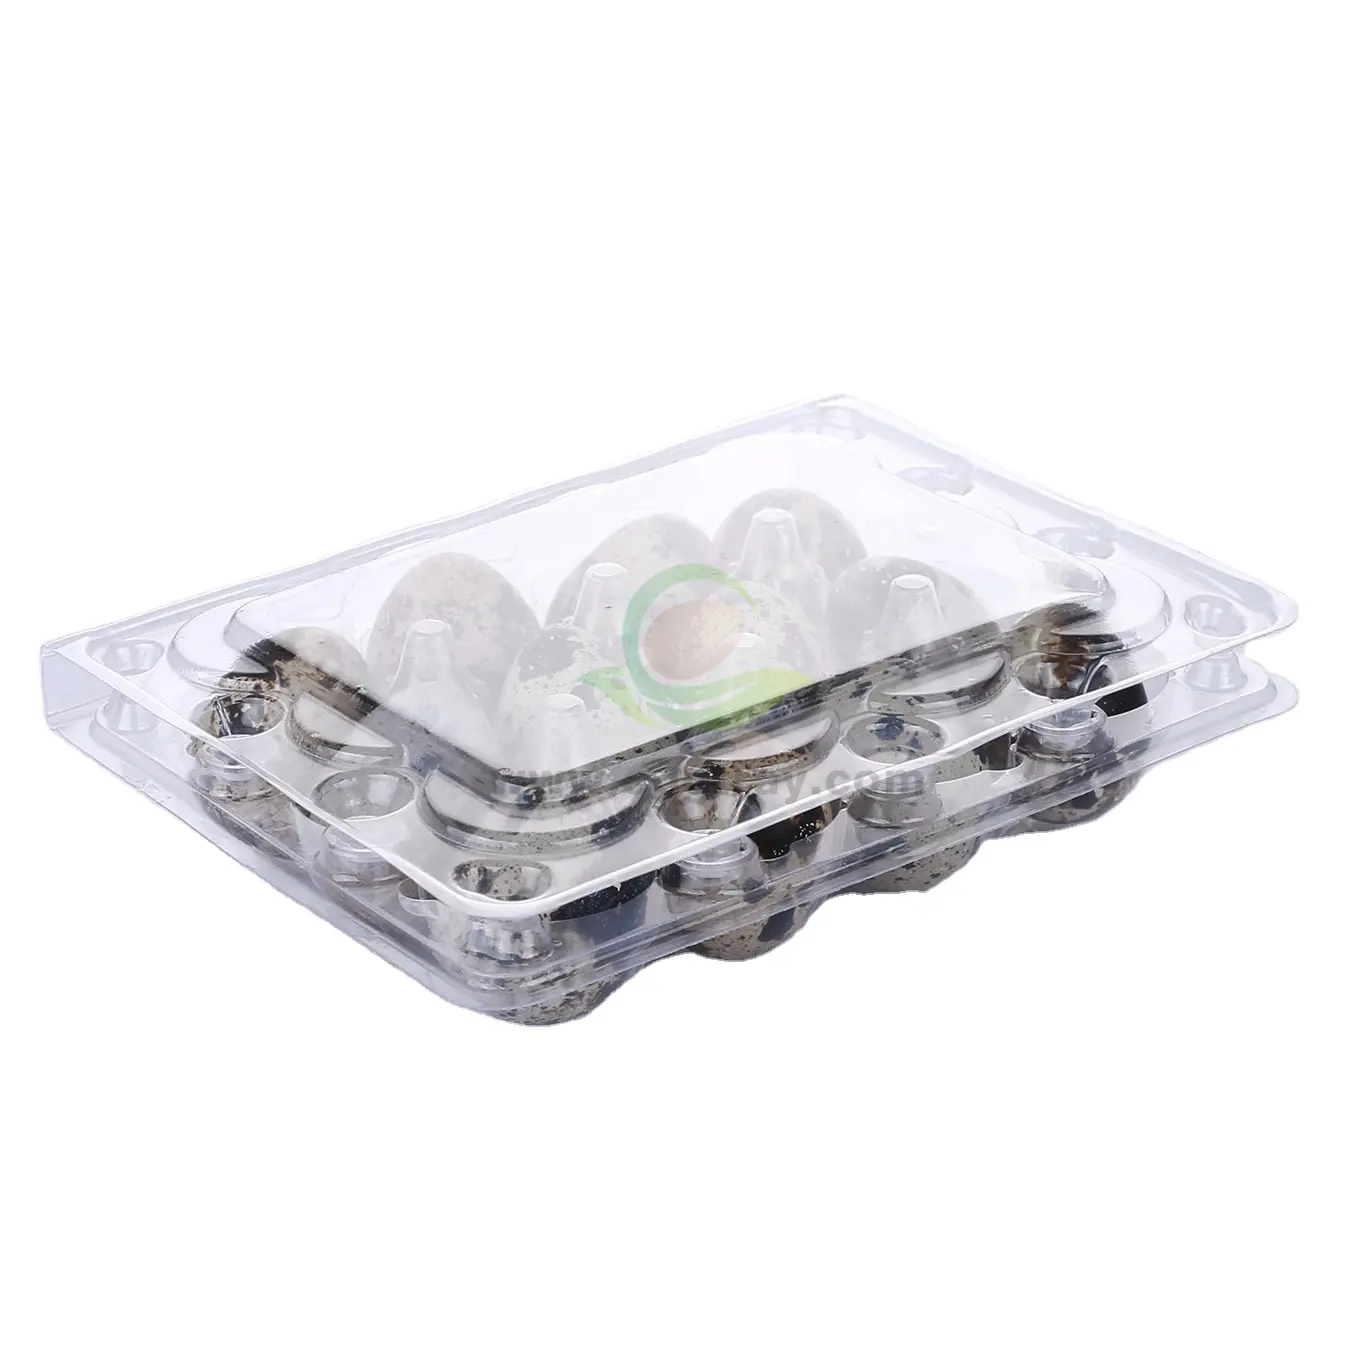 12 holes quail egg tray packing clear disposable plastic quail egg tray